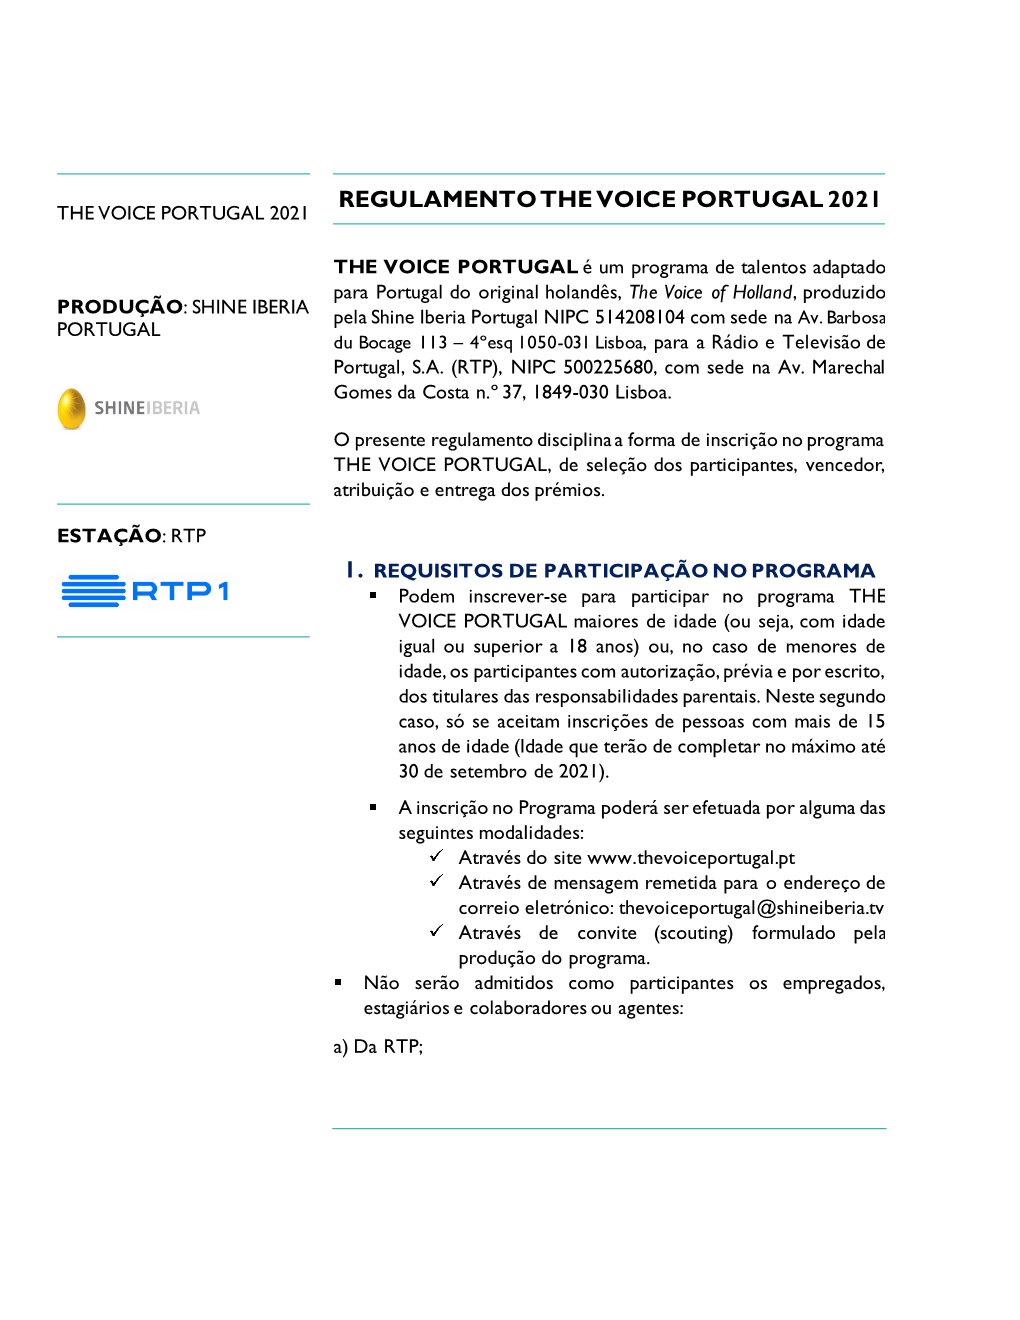 Regulamento the Voice Portugal 2021 the Voice Portugal 2021